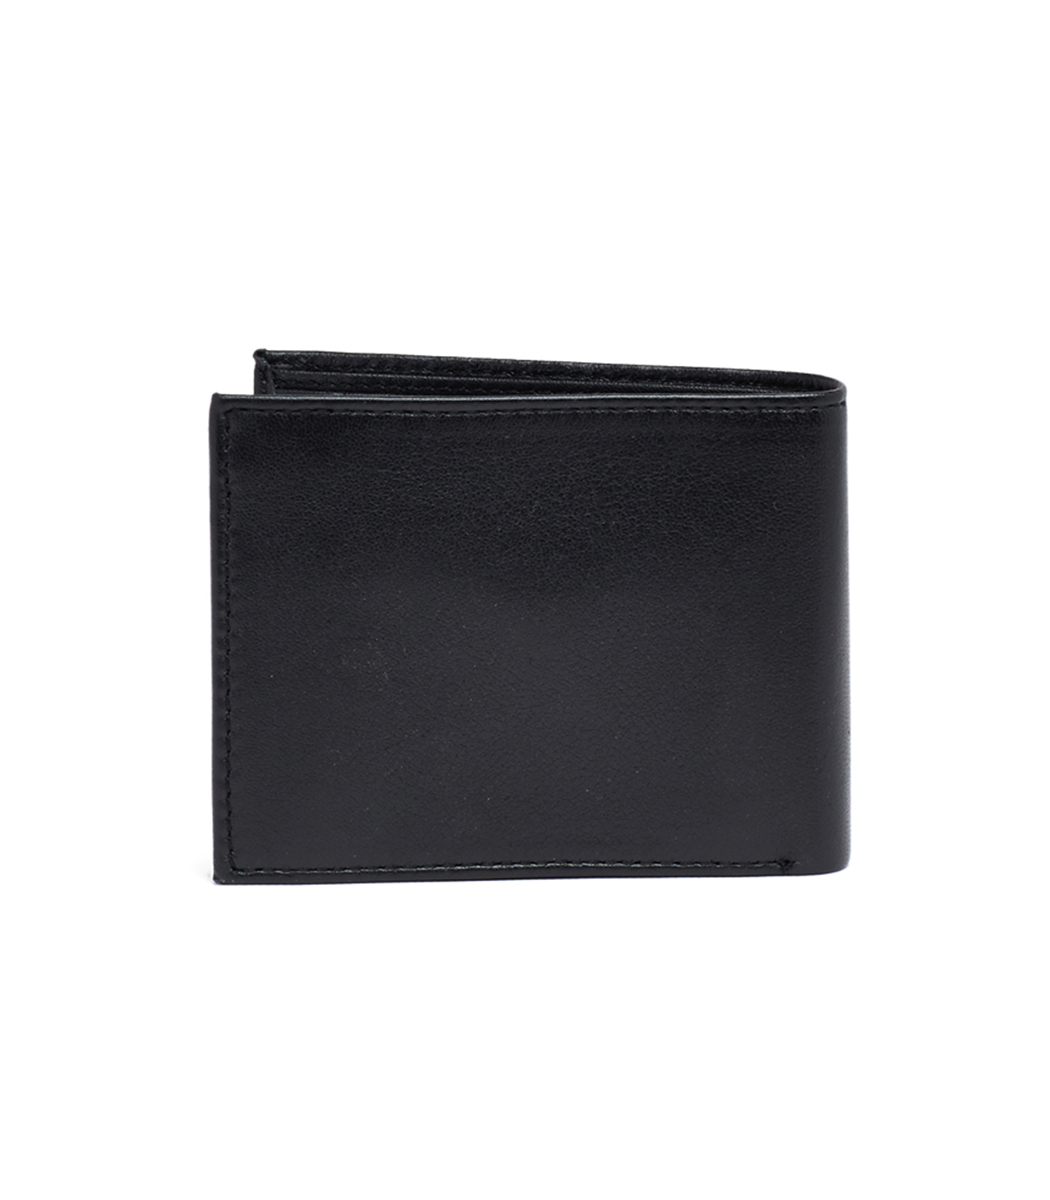 Unisex Genuine Leather Wallet, Black | LW29 - SWISS MILITARY CONSUMER ...